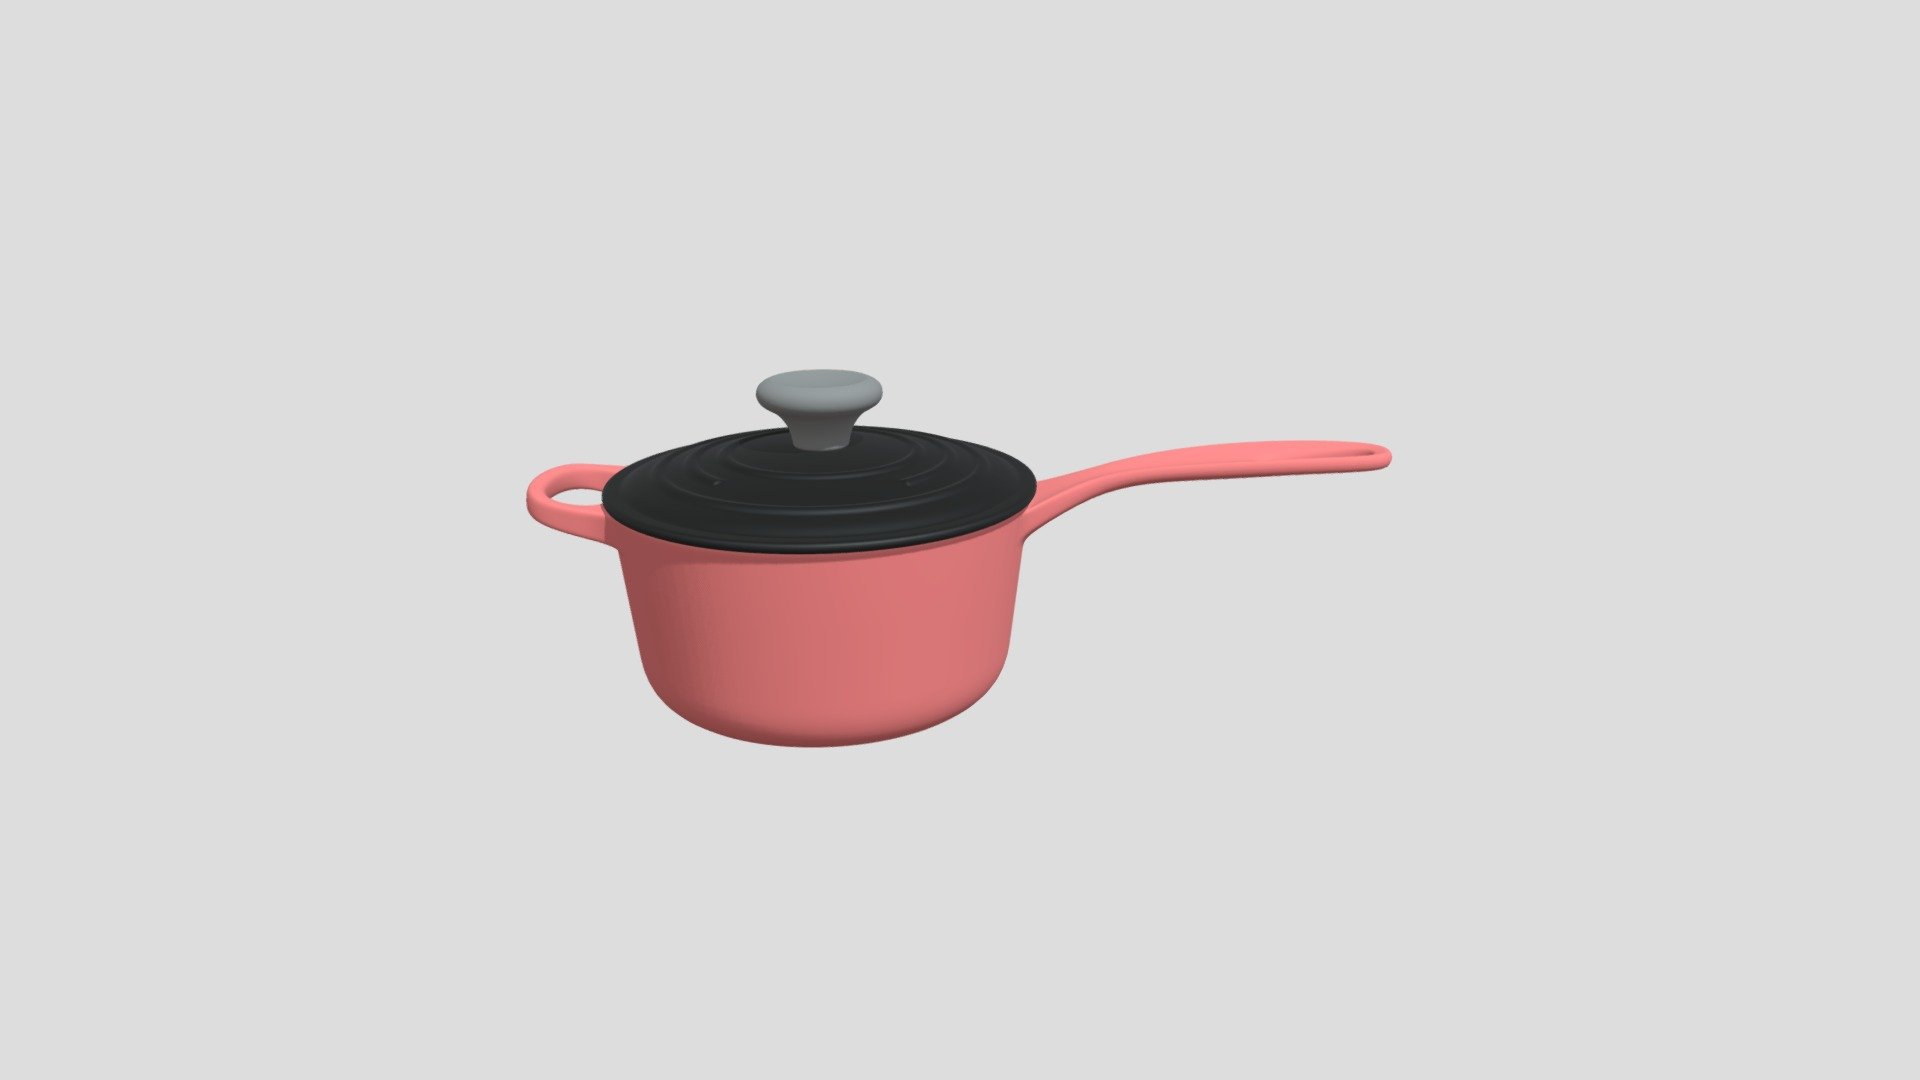 3D Model of Sauce Pan for your kitchen tools/equipment - Sauce Pan - Buy Royalty Free 3D model by ireneusben 3d model